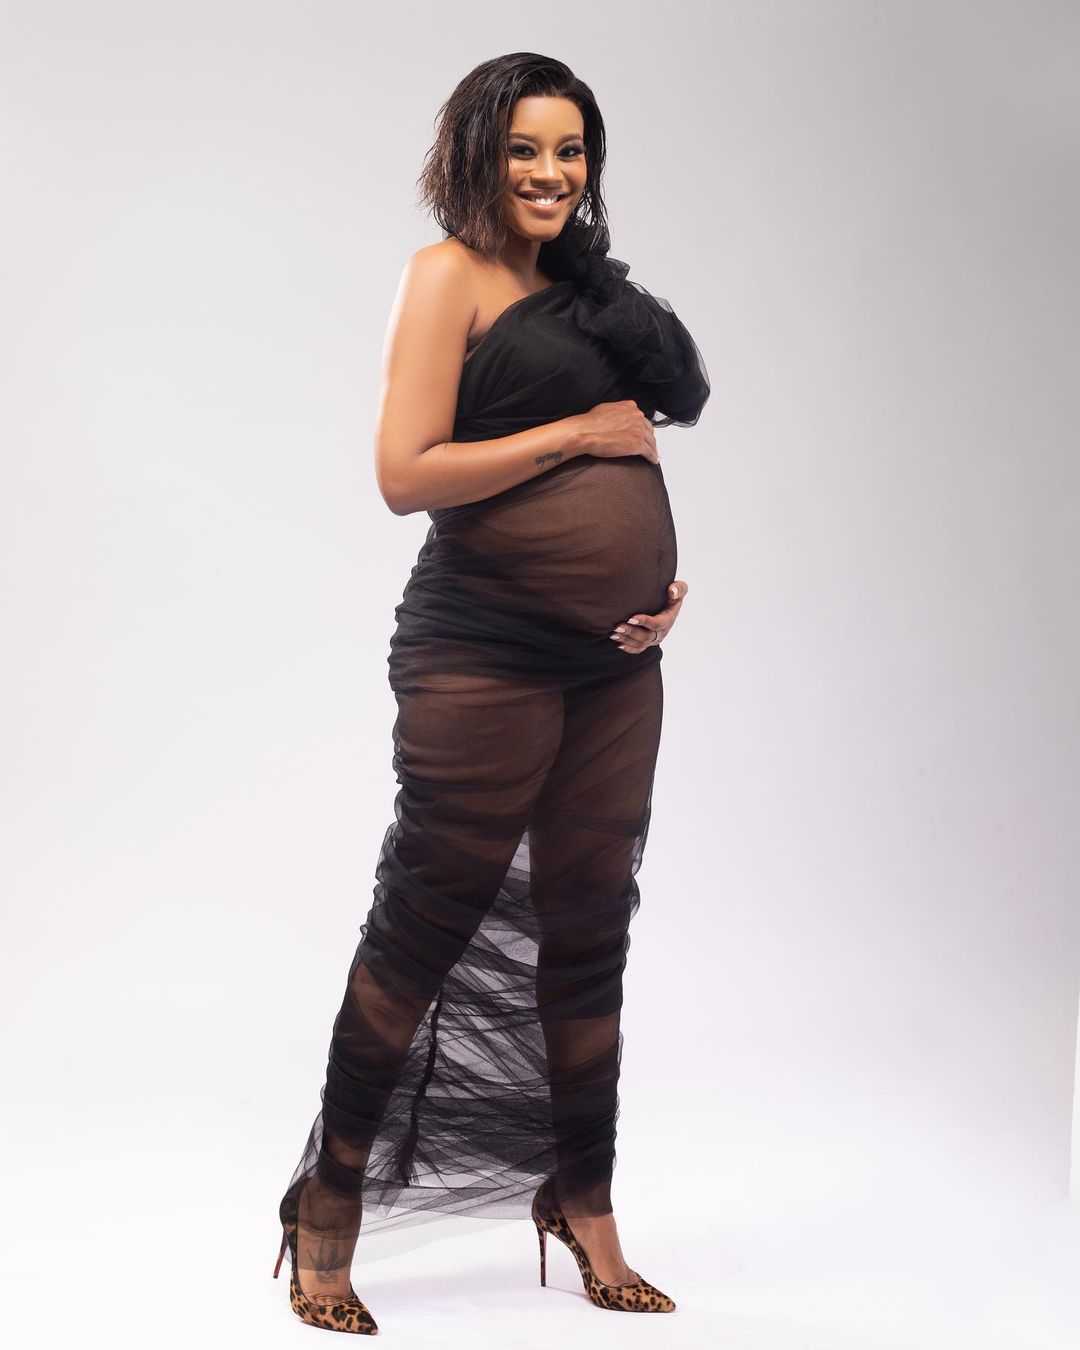 Tshepi Vundla Pregnant, Shows Off Baby Bump In Maternity Photoshoot